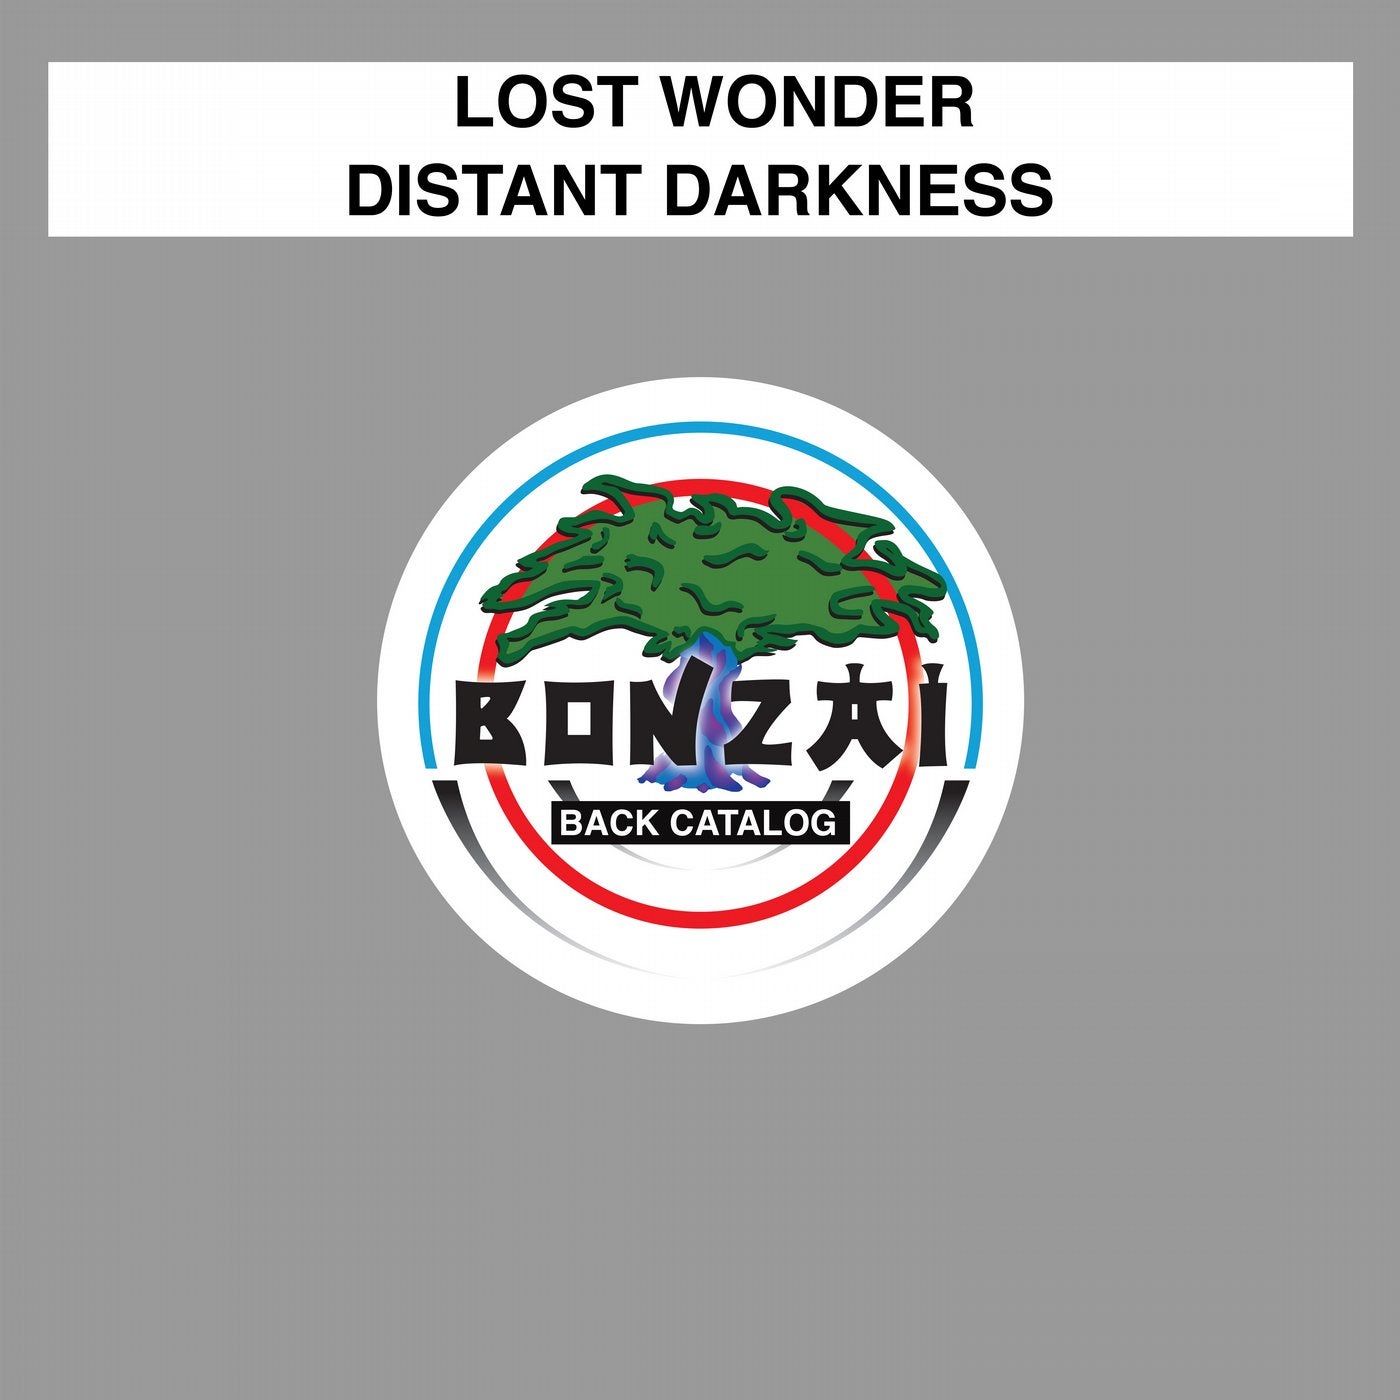 Distant Darkness